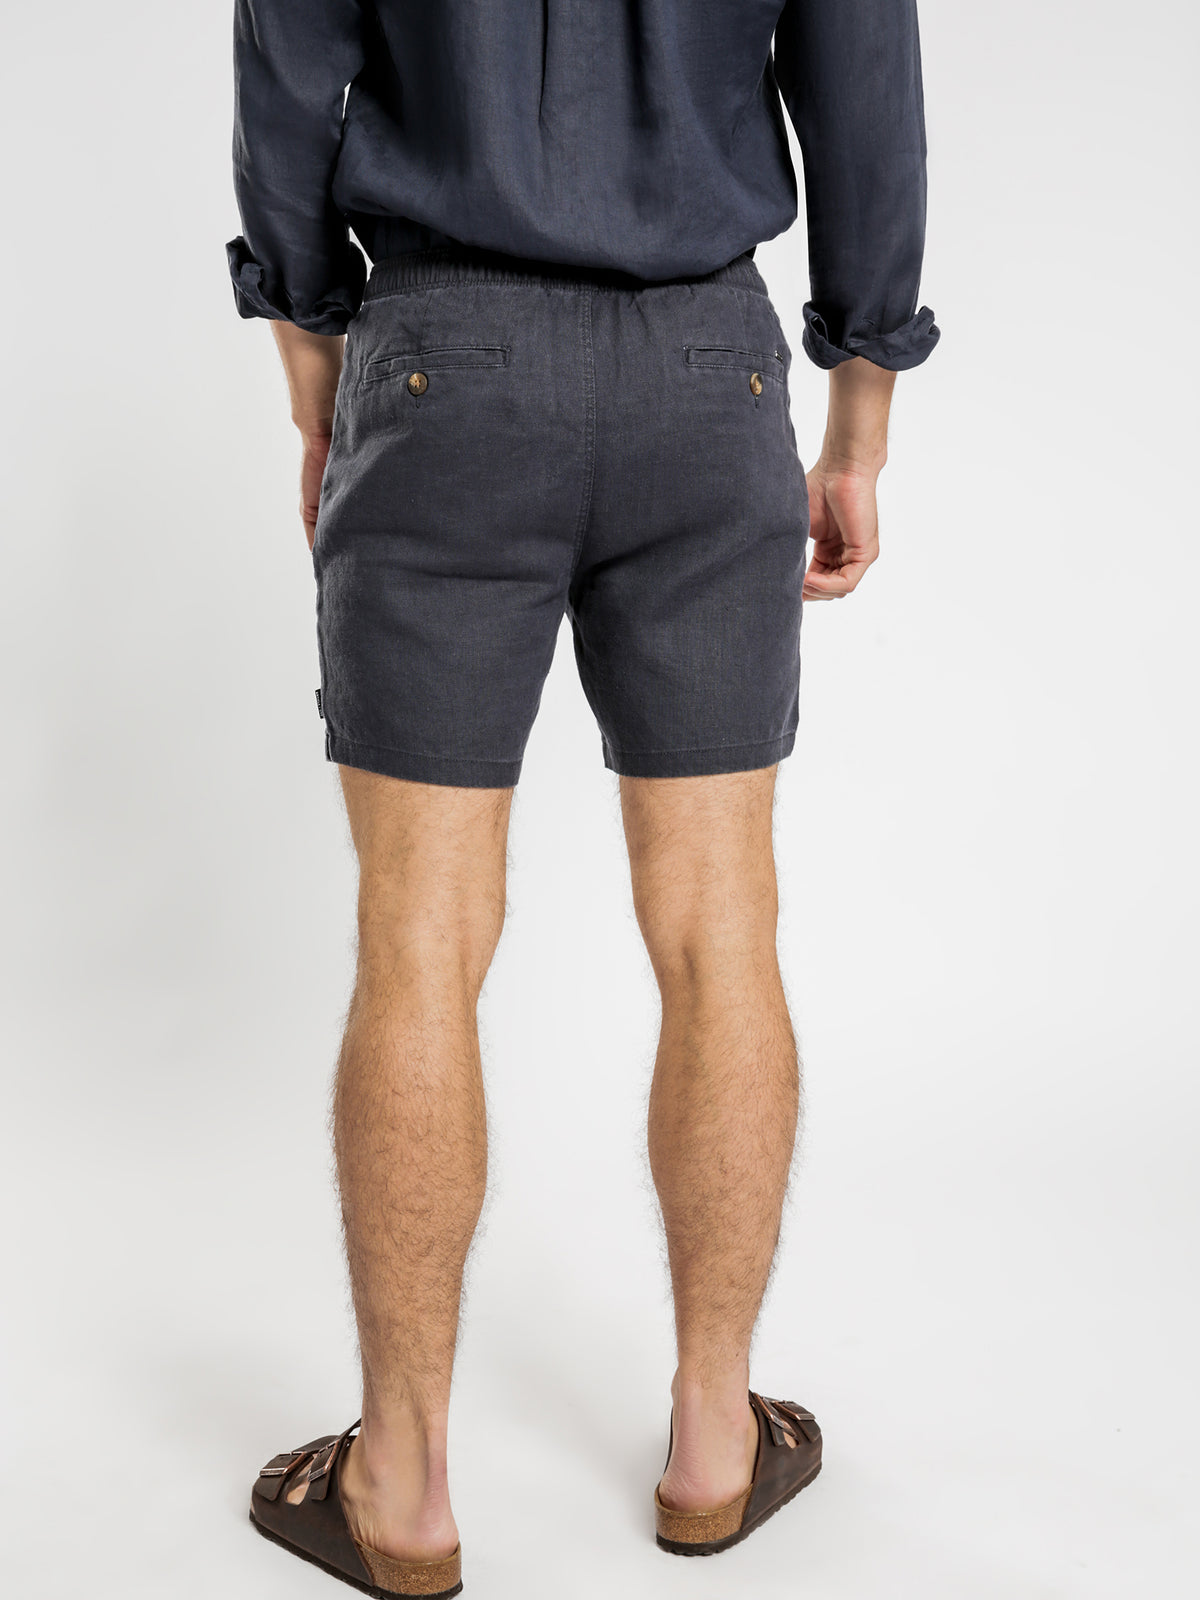 Nelson Shorts in Navy Linen